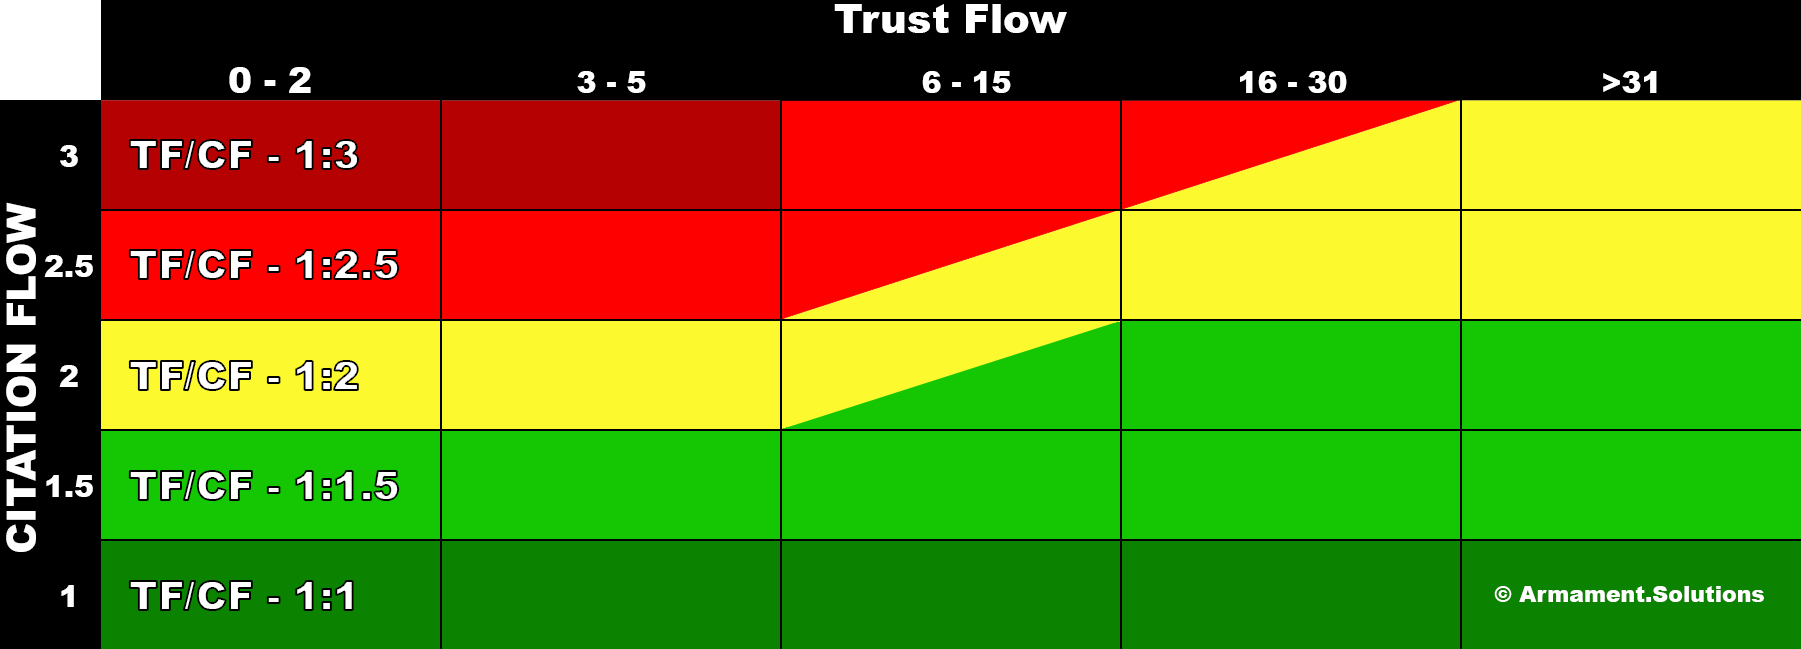 The Trust Flow/Citation Flow Naturalness Chart